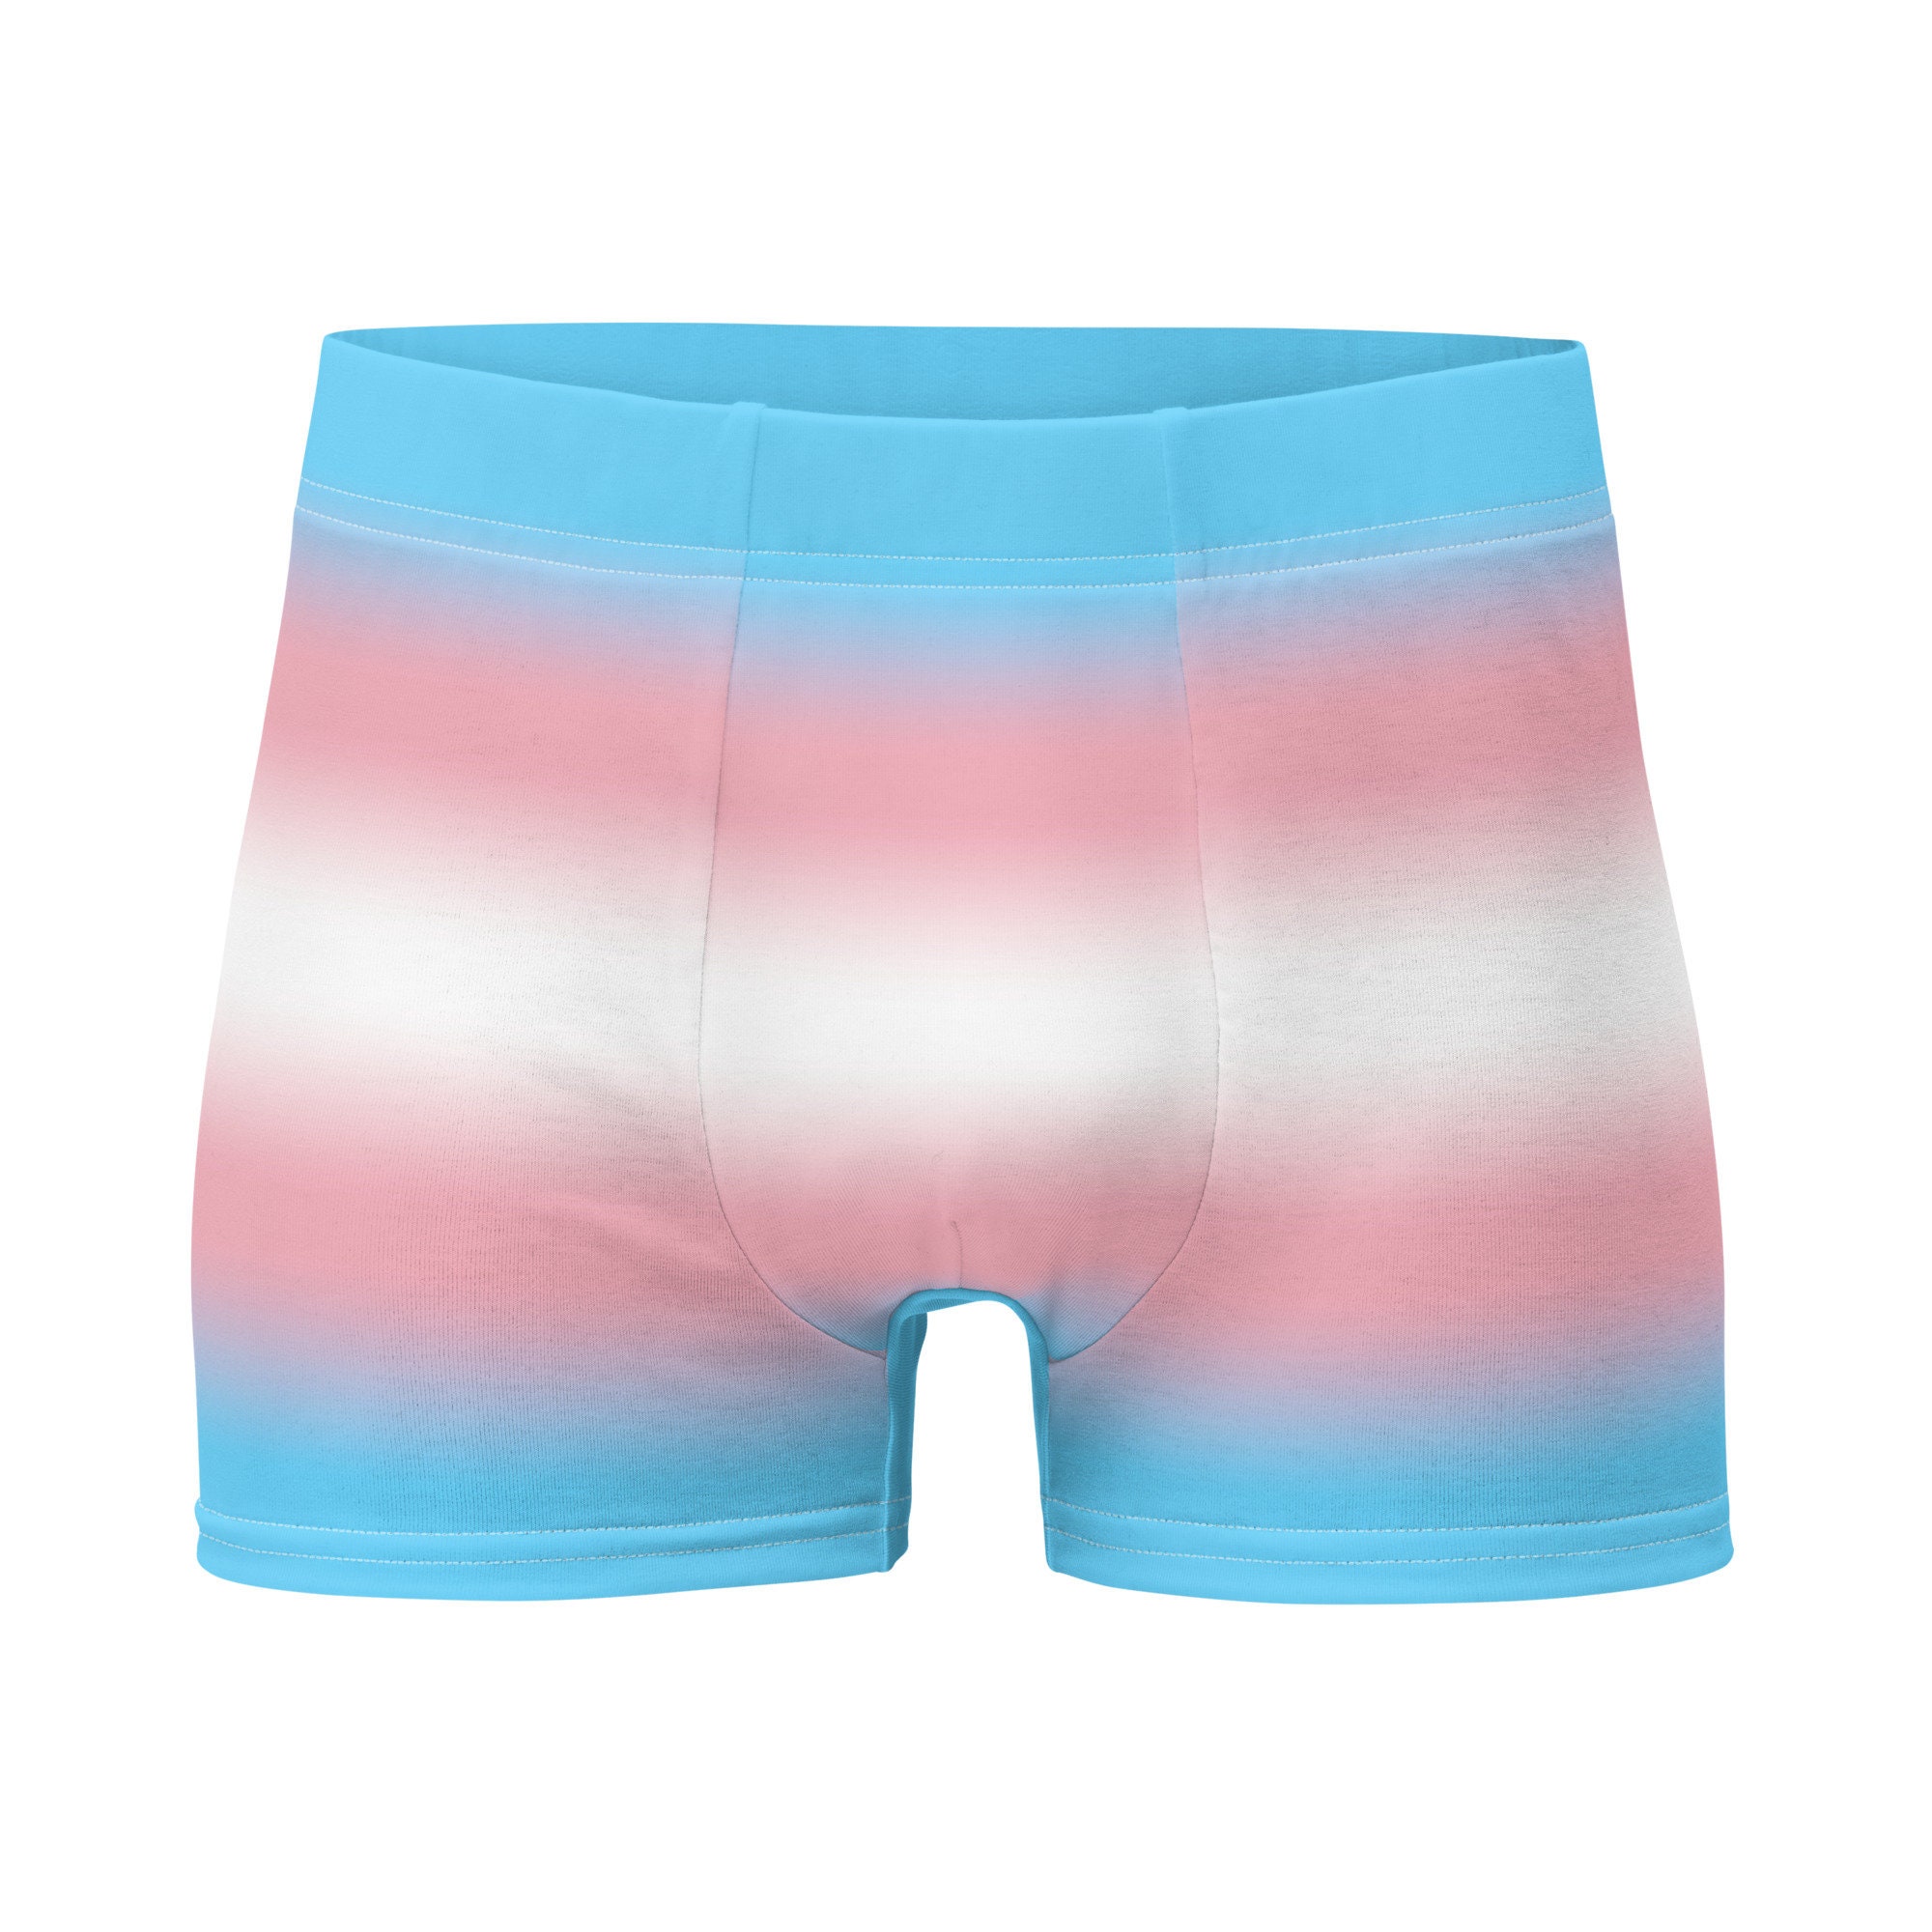 Transgender FTM Penis Enhancing Bulge Underwear briefs boxer shorts jocks